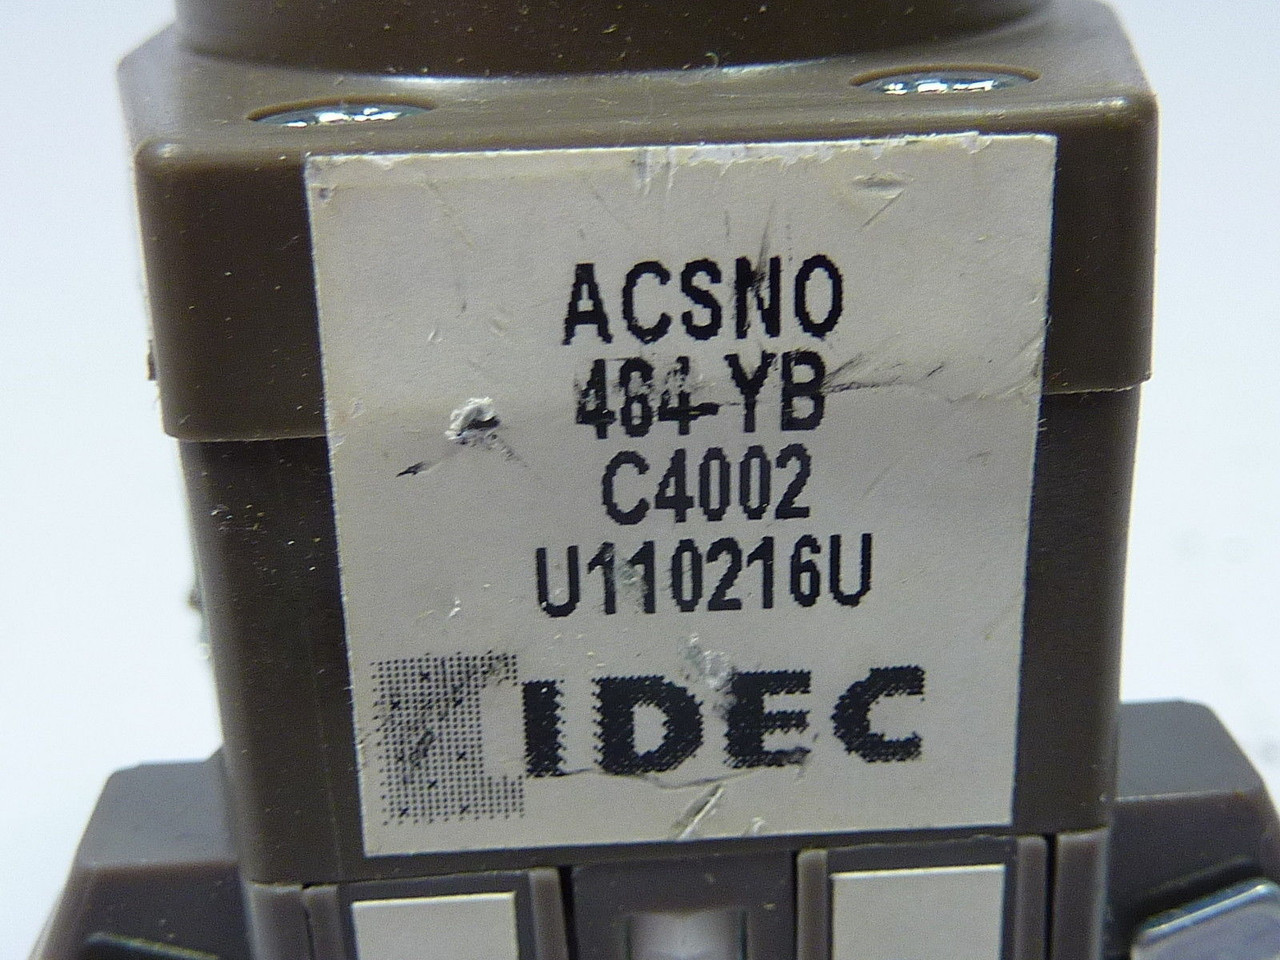 IDEC ACSNO-484YB-C4002 Cam Switch USED